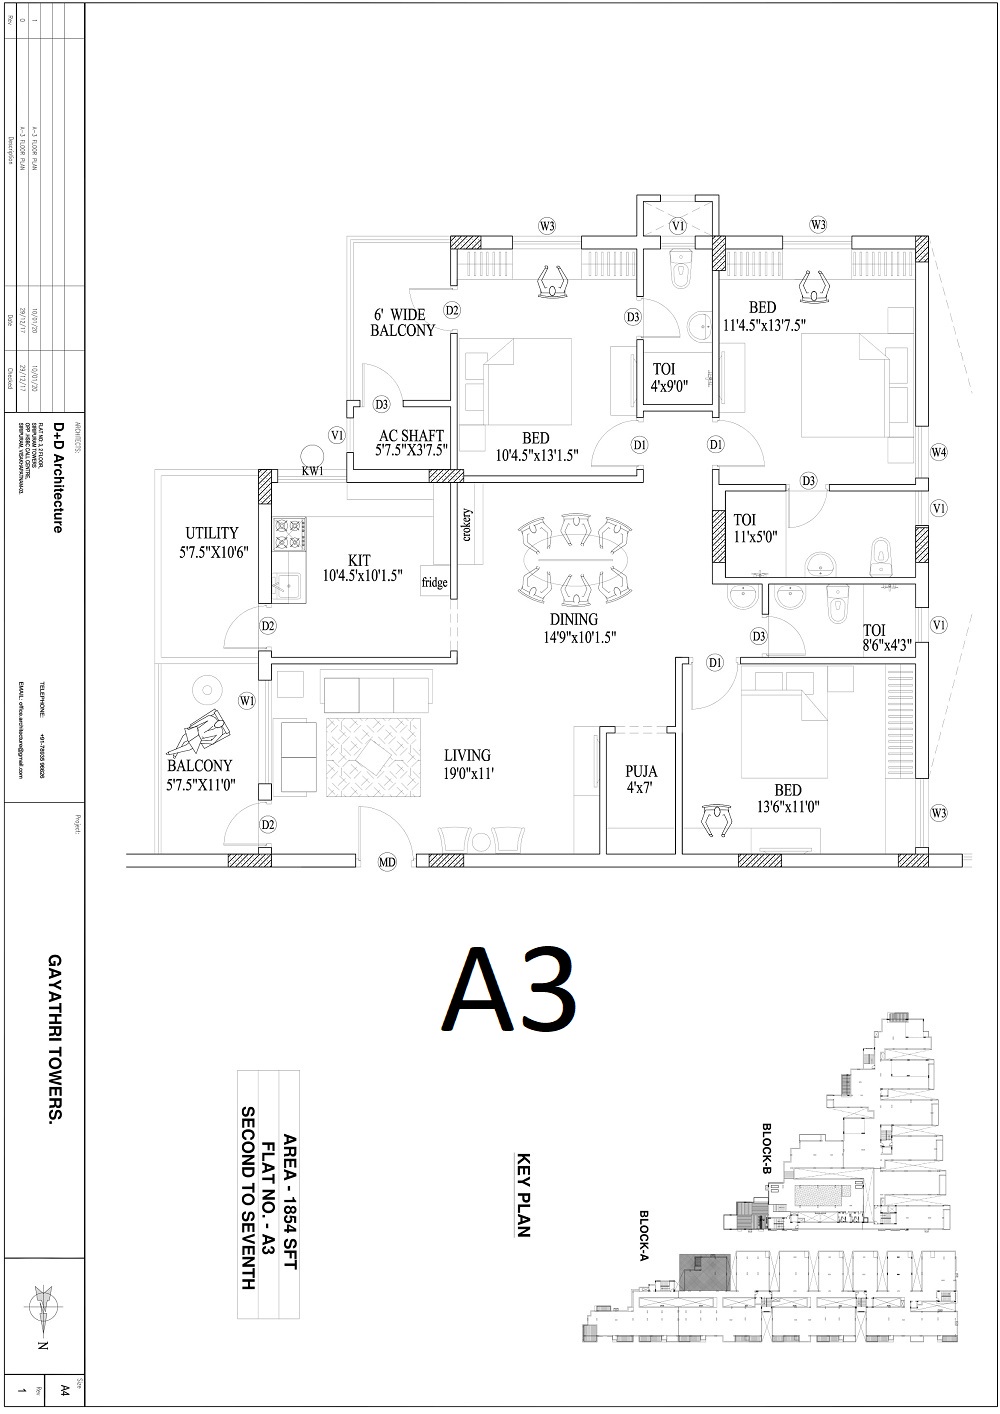 A3 - Tipcal Floor Plan